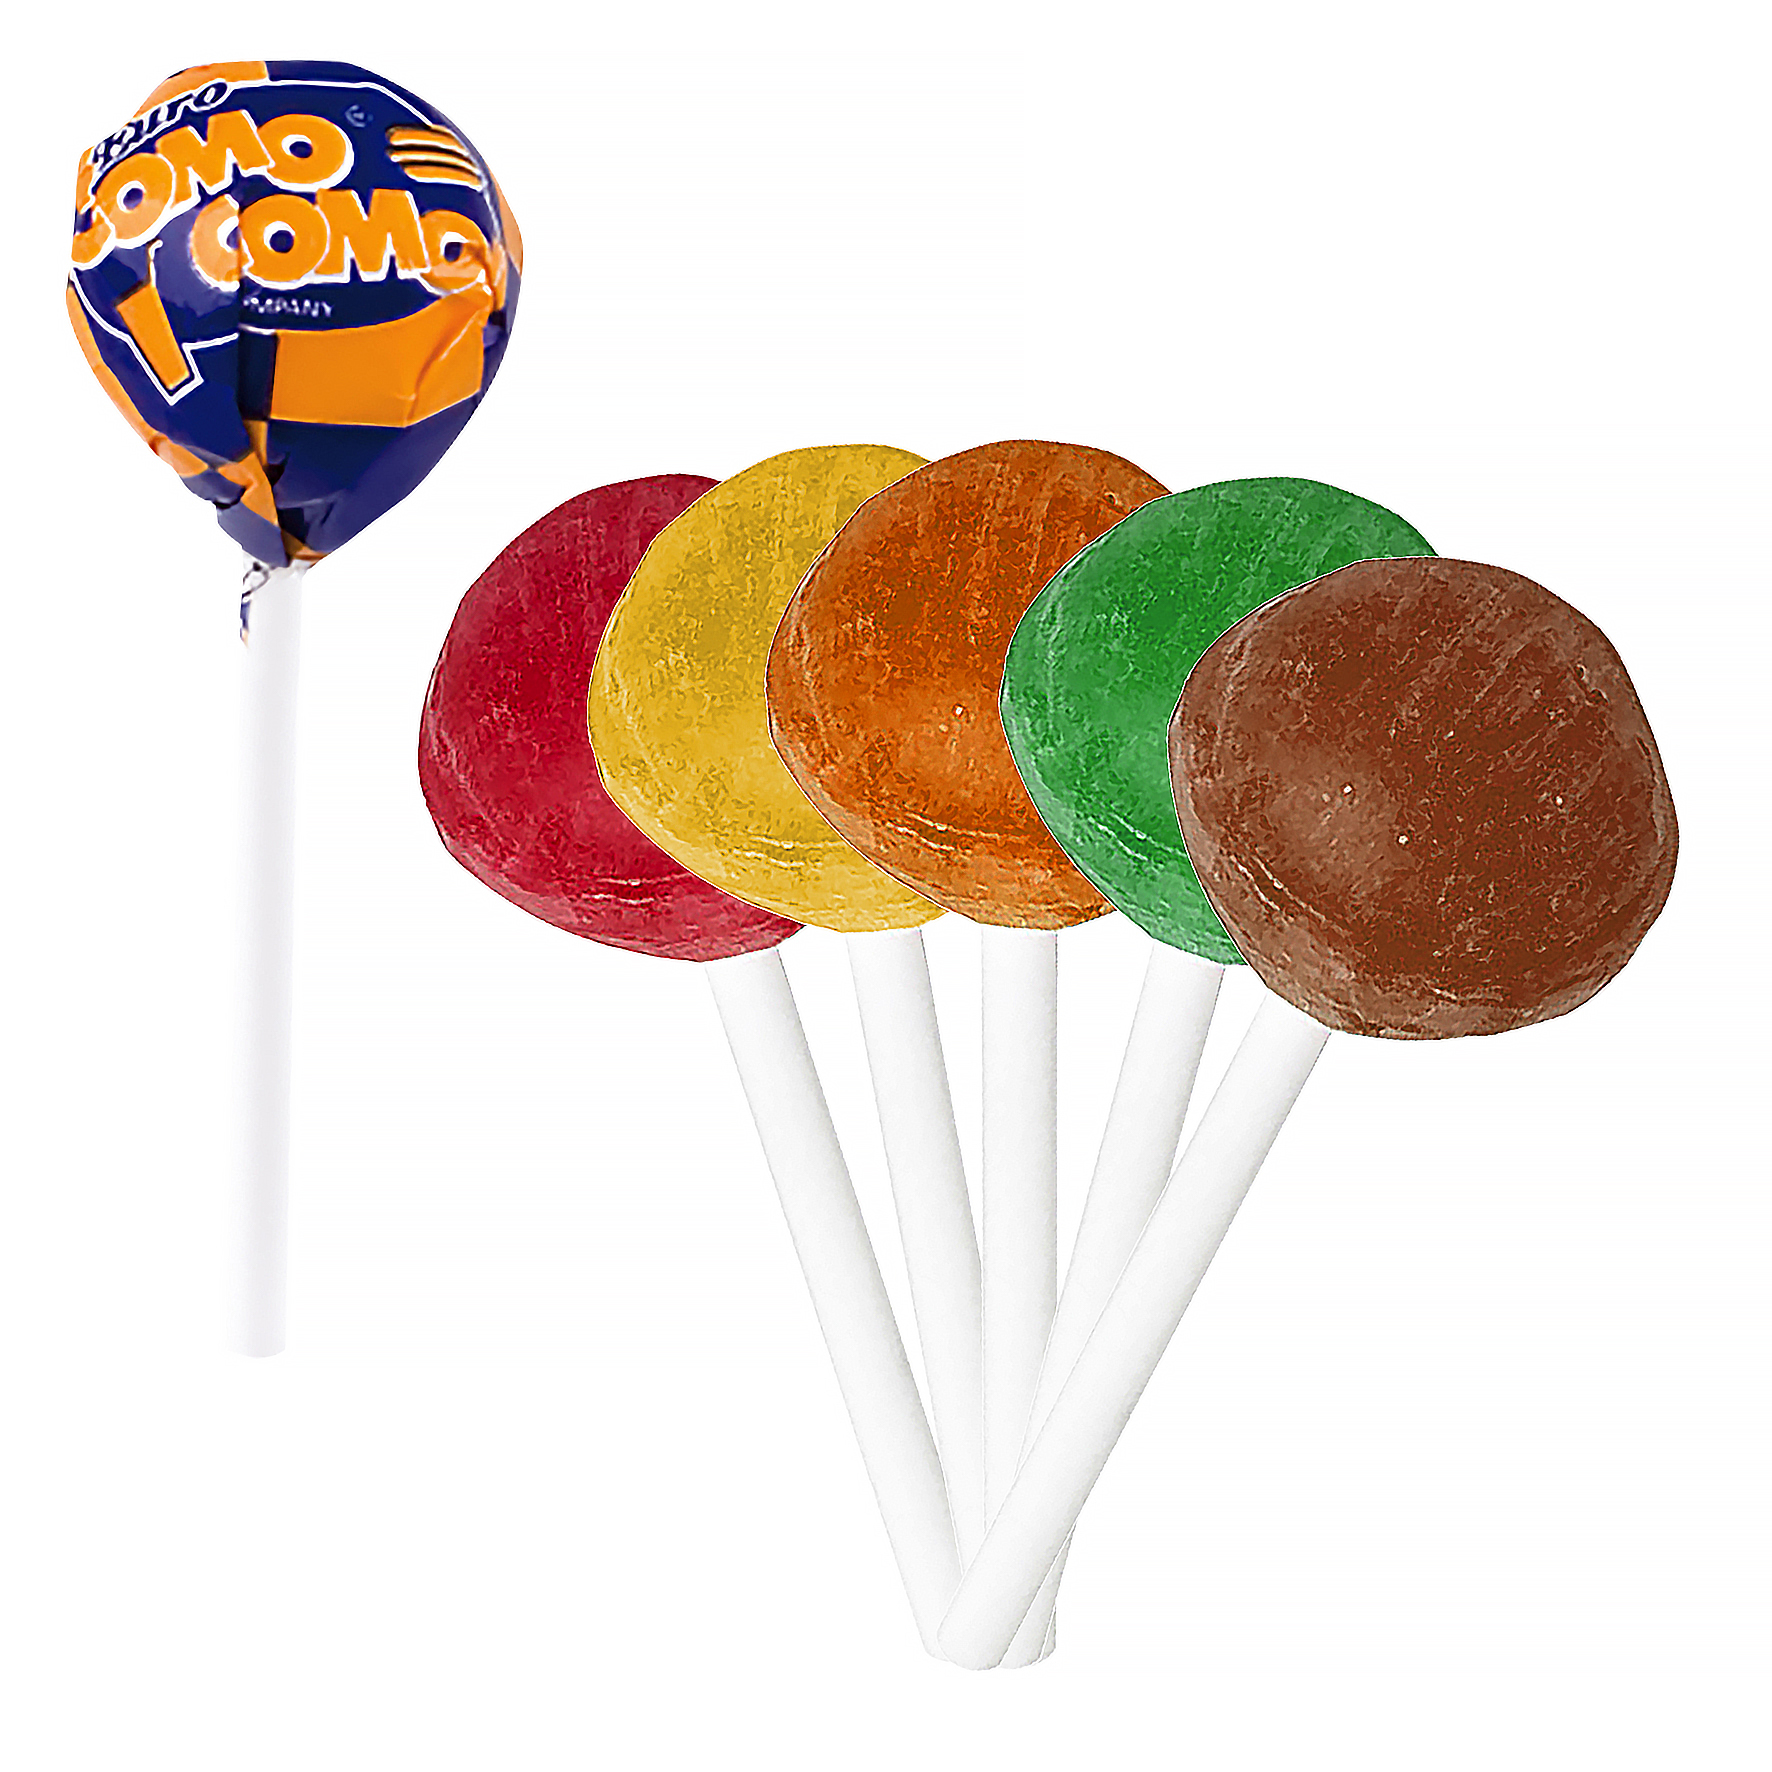 c 0040sf 00 09 - Classic flavoured ball lollipop